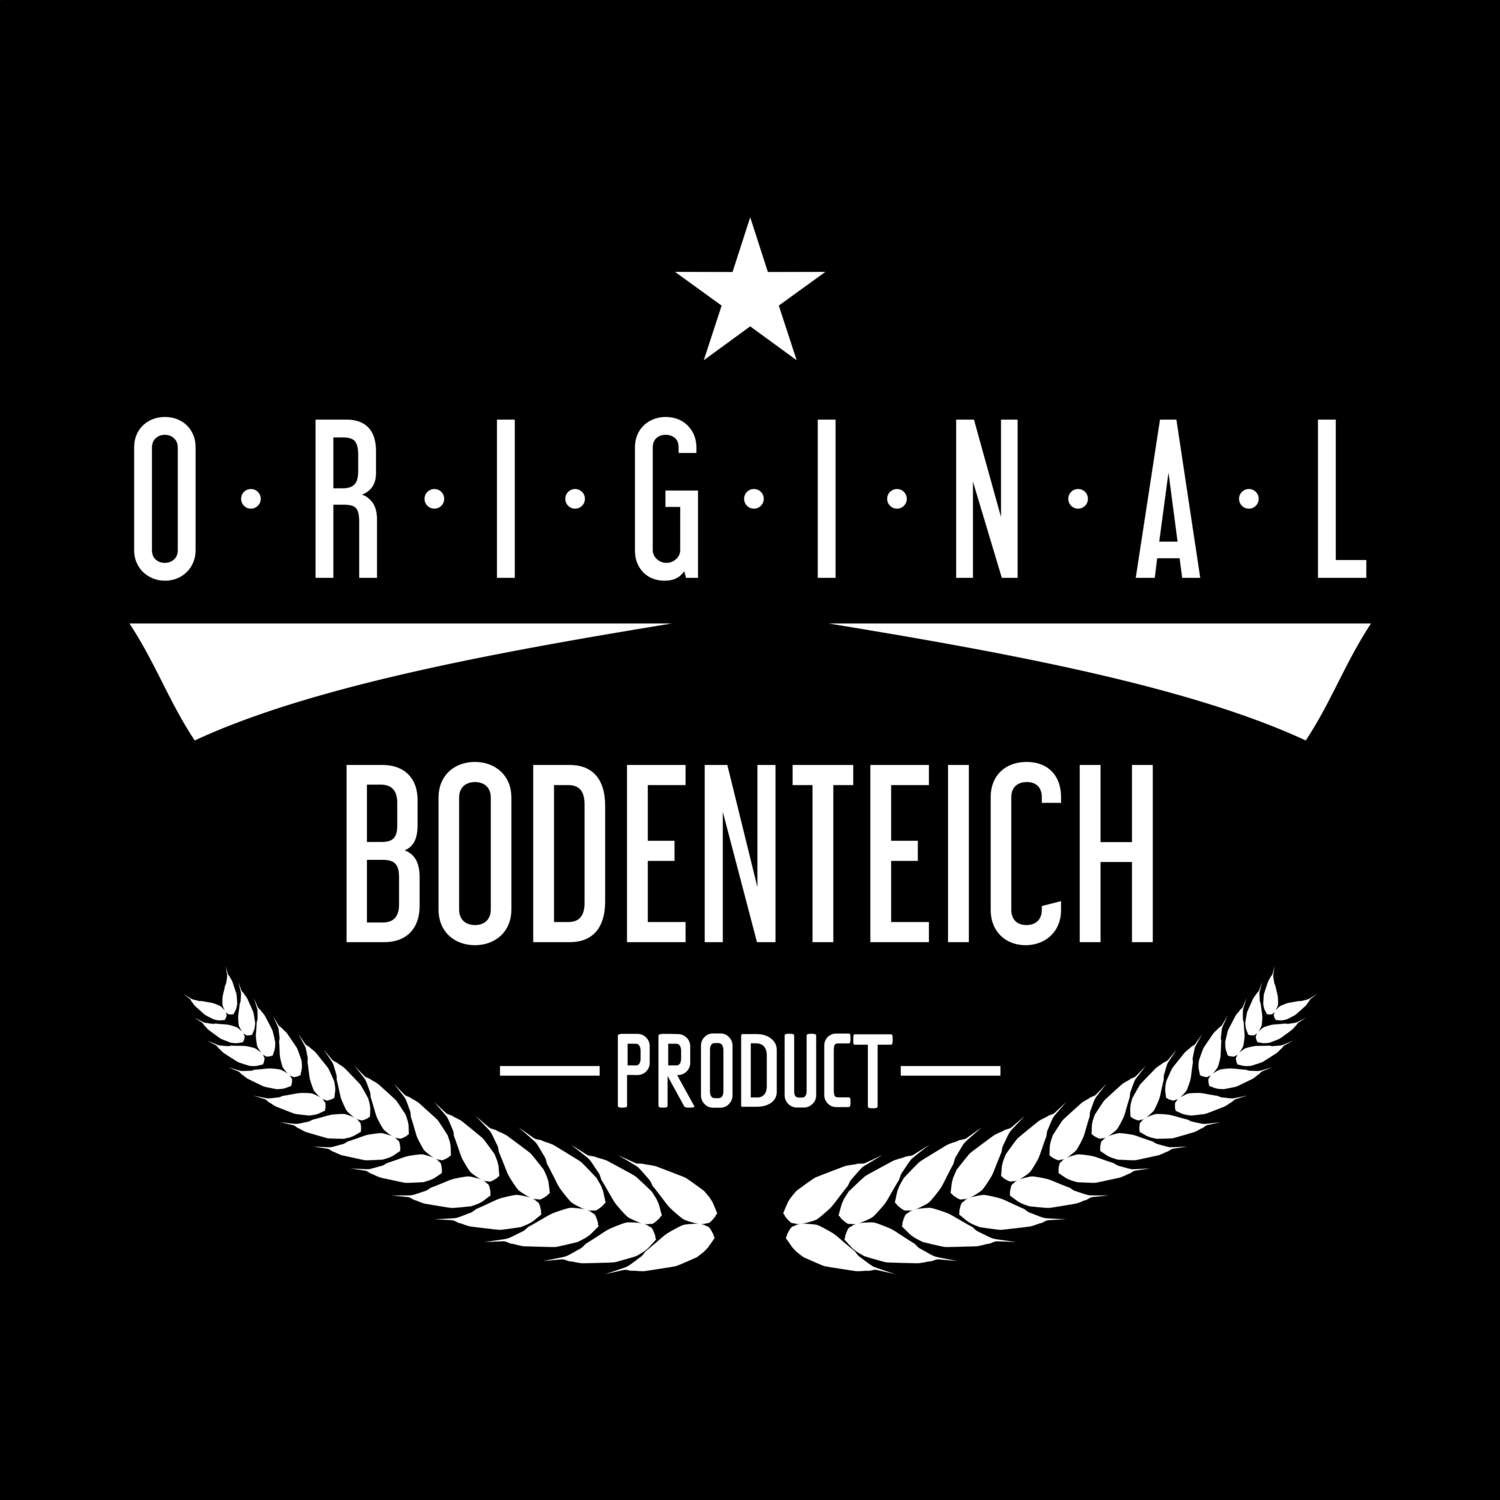 Bodenteich T-Shirt »Original Product«